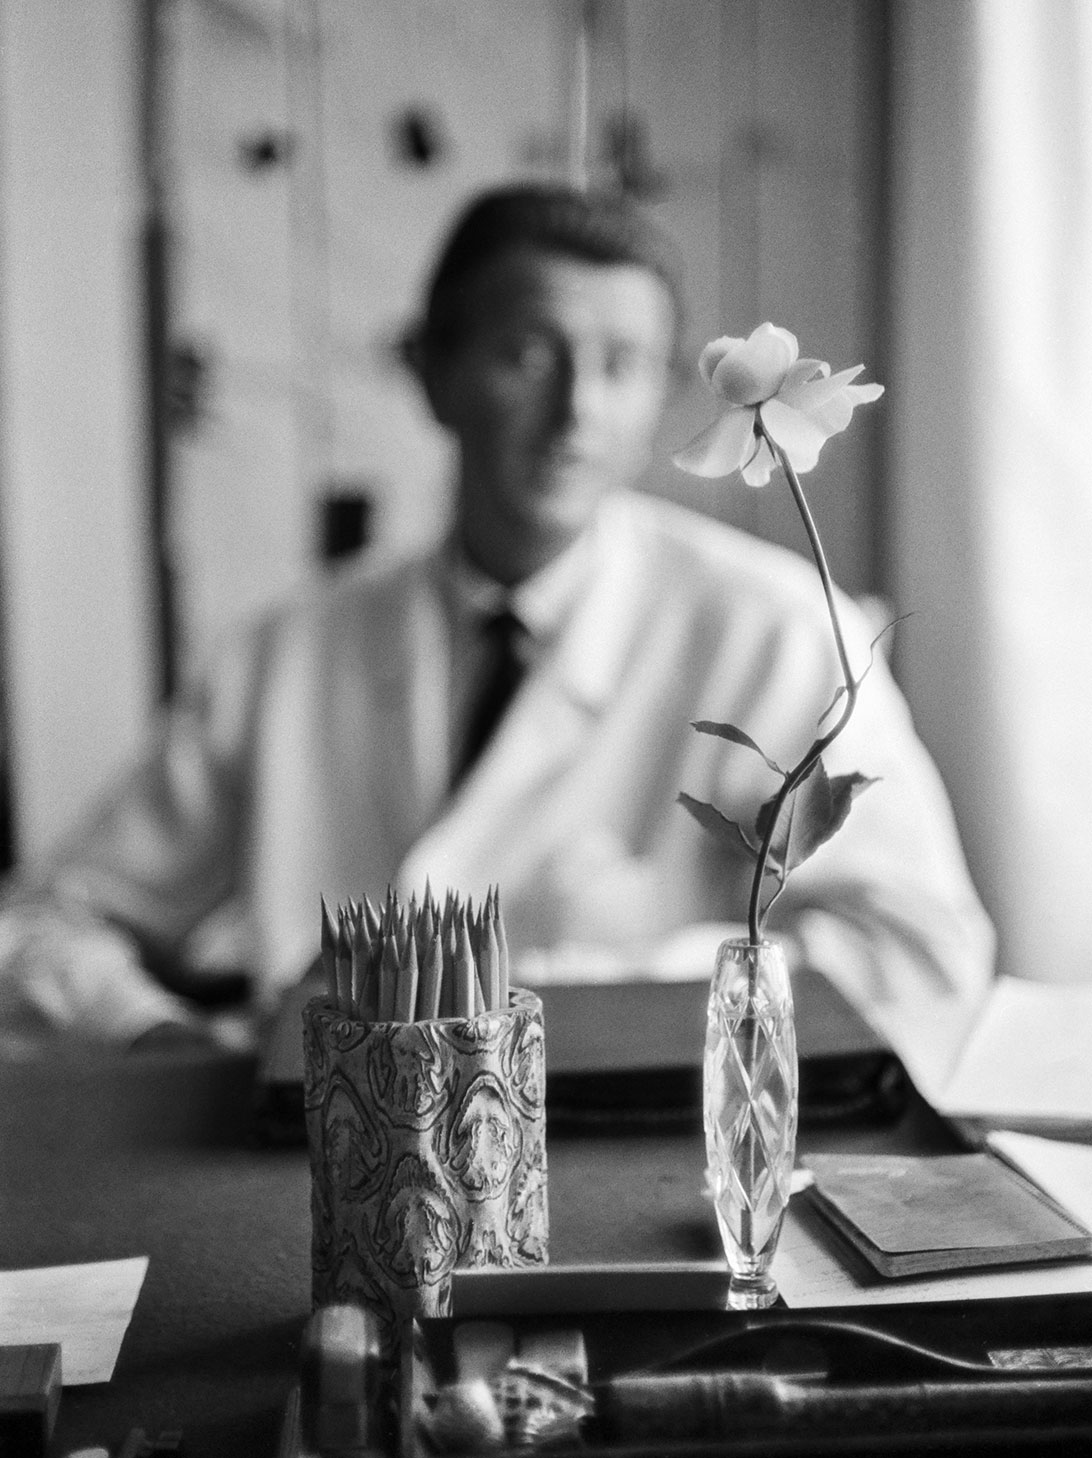 Hubert de Givenchy perfumer